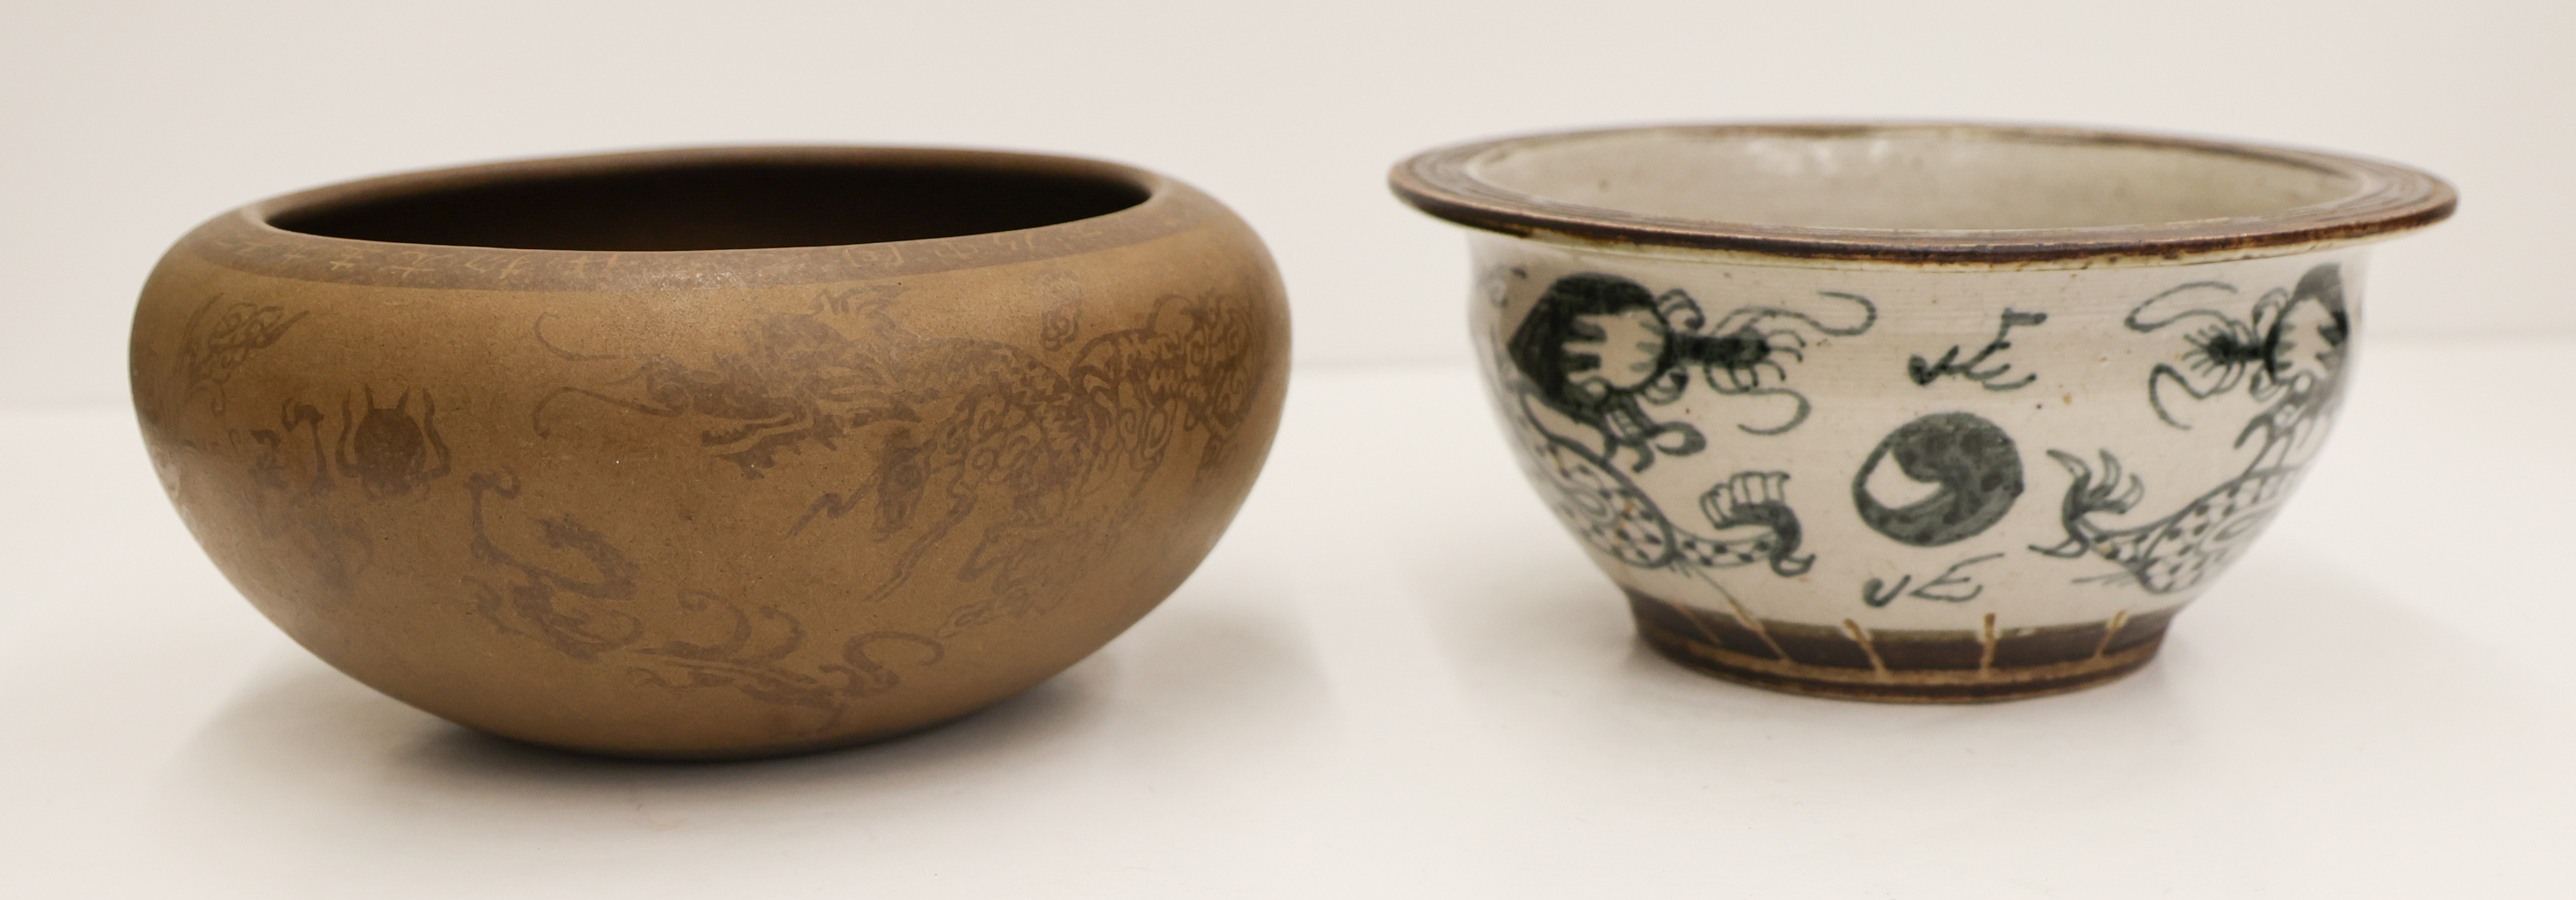 2pc Chinese Ceramic Censer Bowls